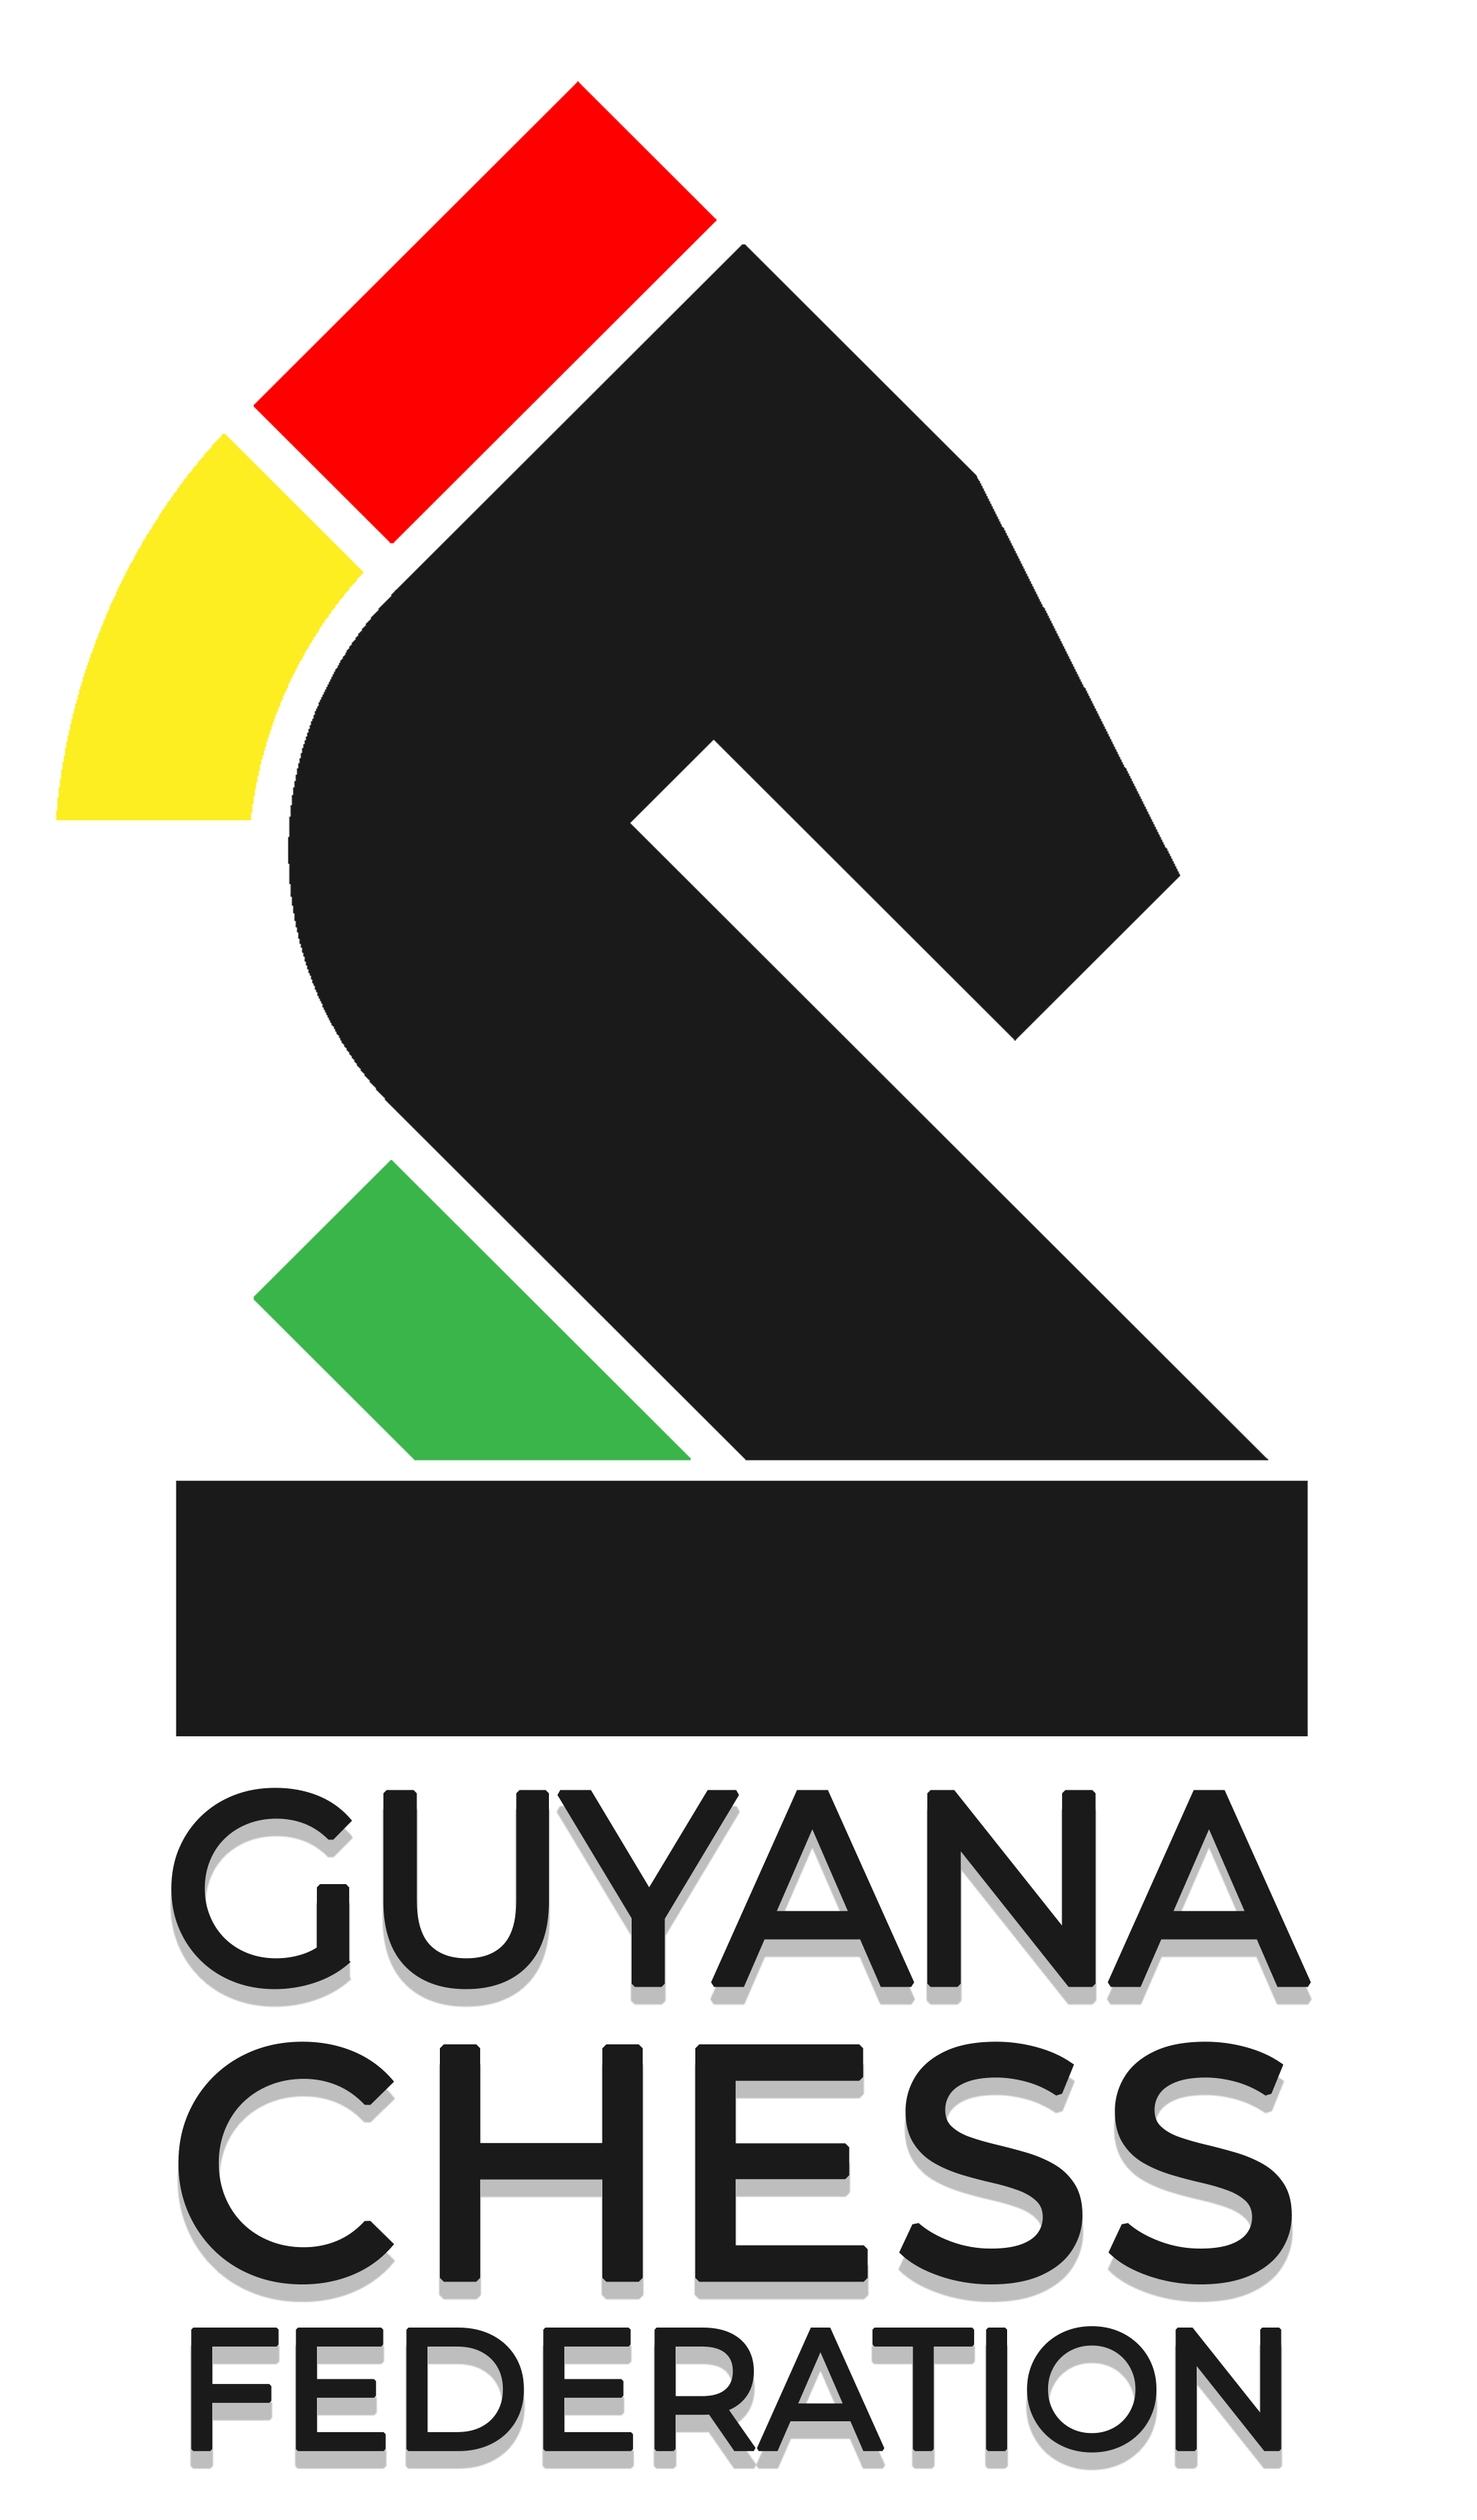 Guyana Chess Federation